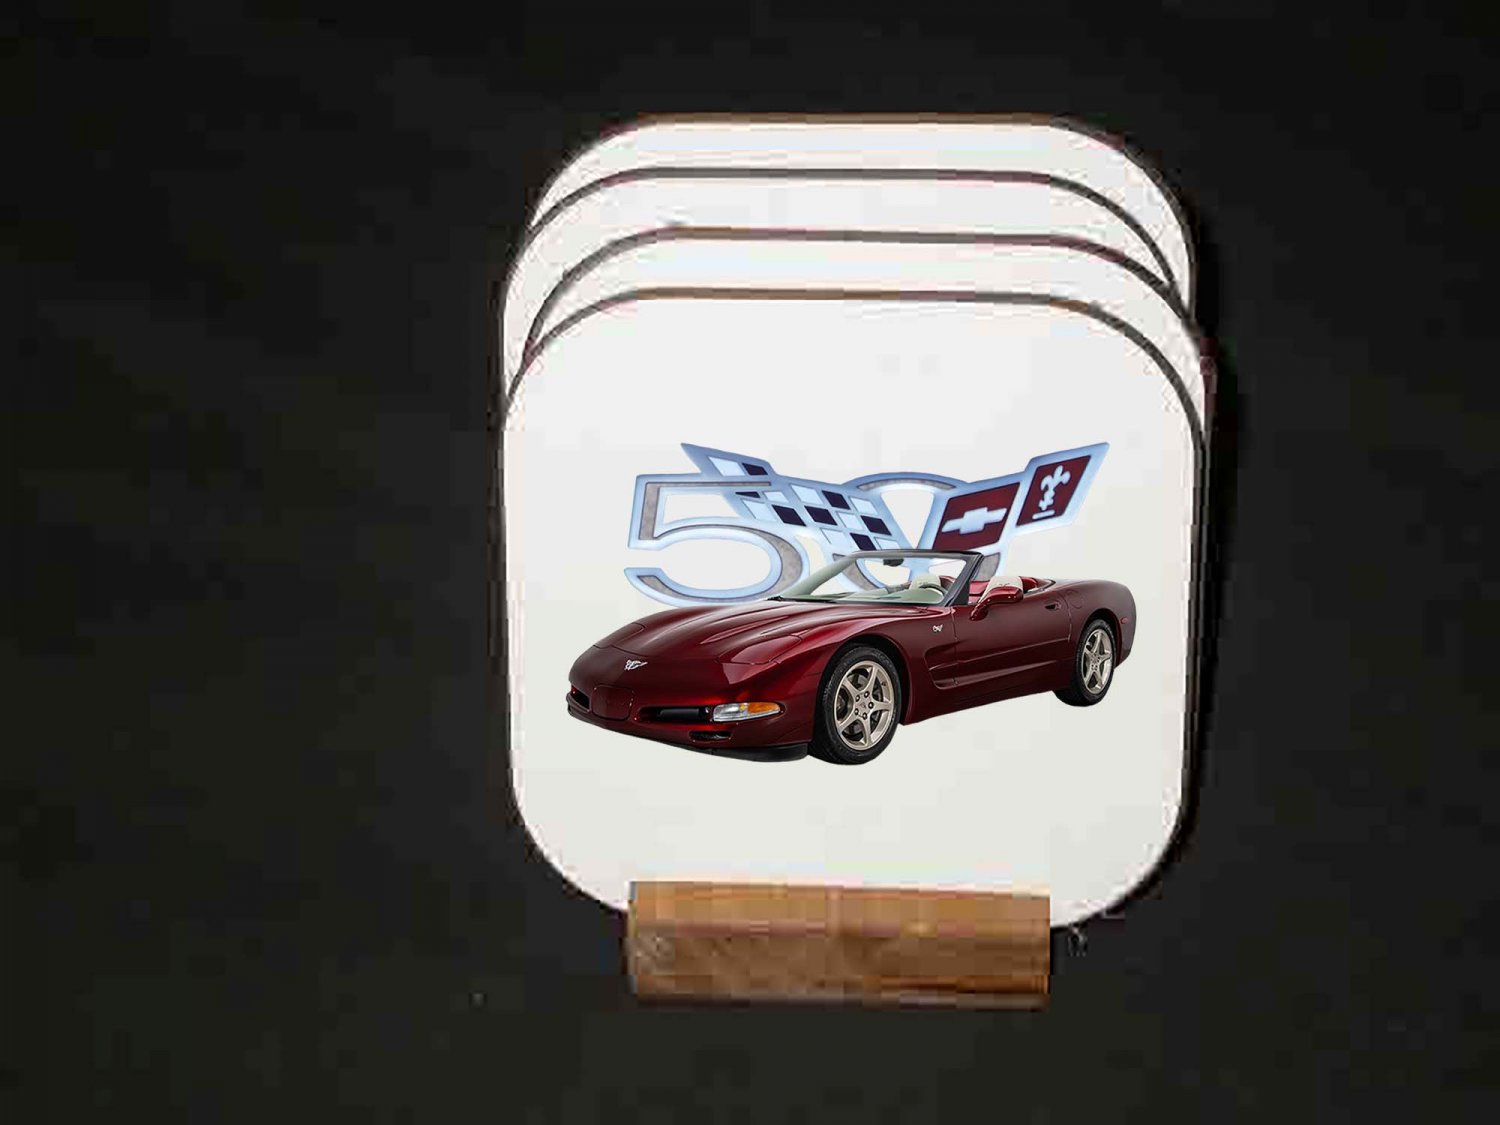 New 2003 50th anniversary Chevy Corvette Hard Coaster set!!